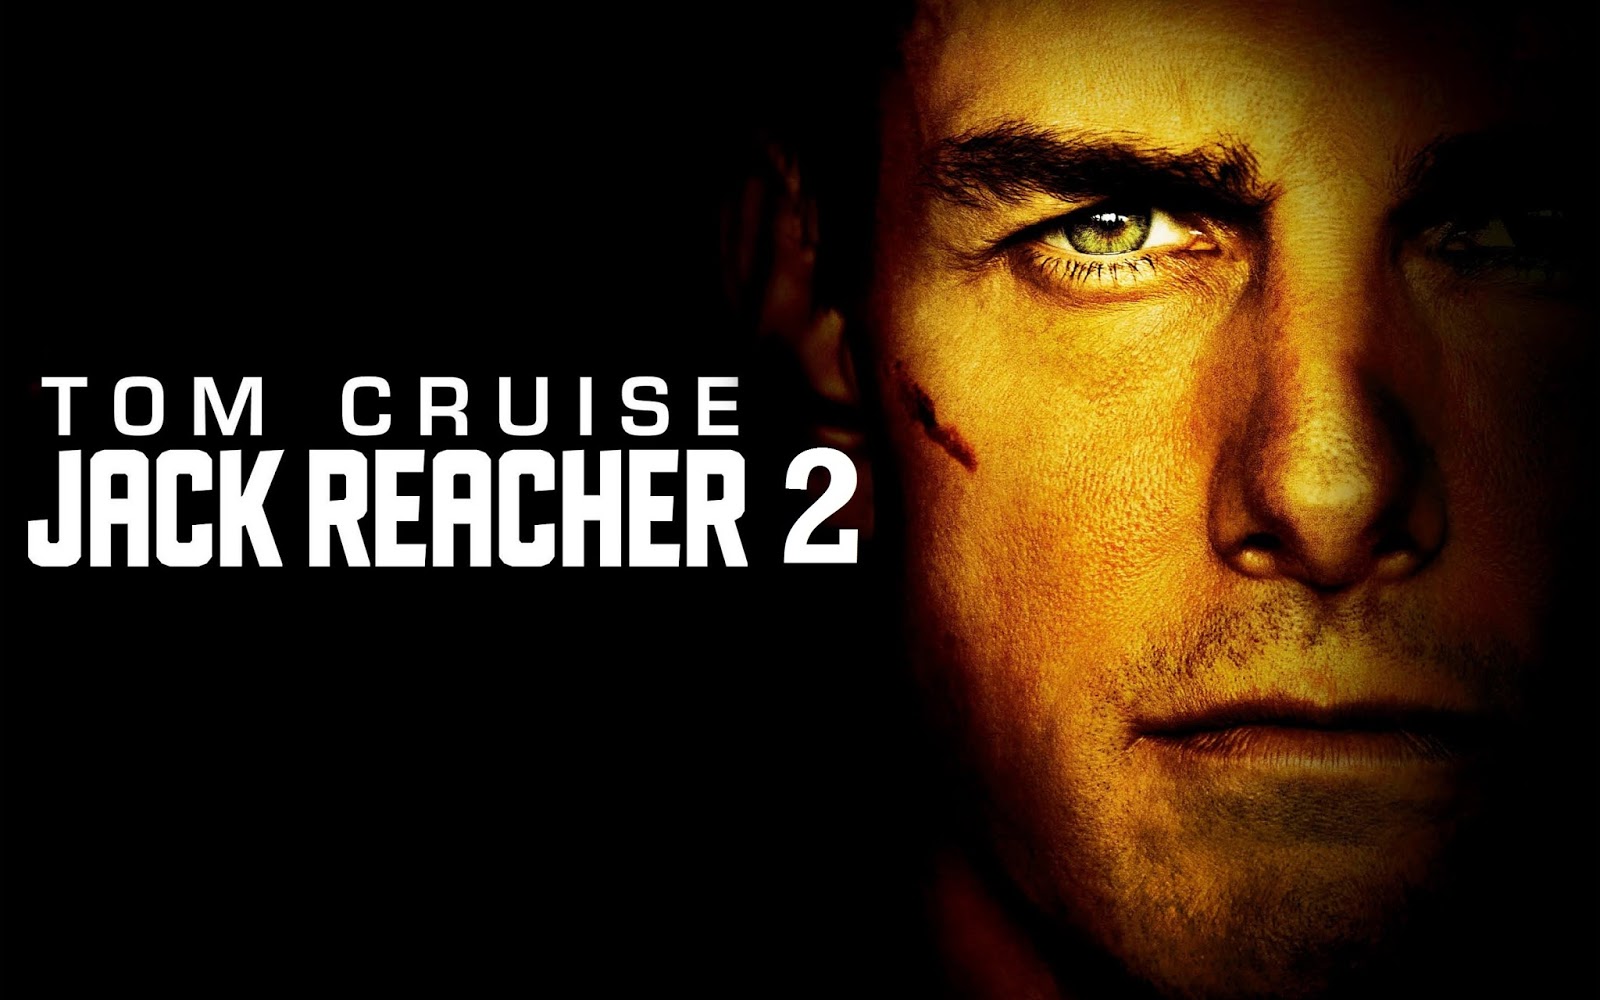 tom cruise movie jack reacher sequel